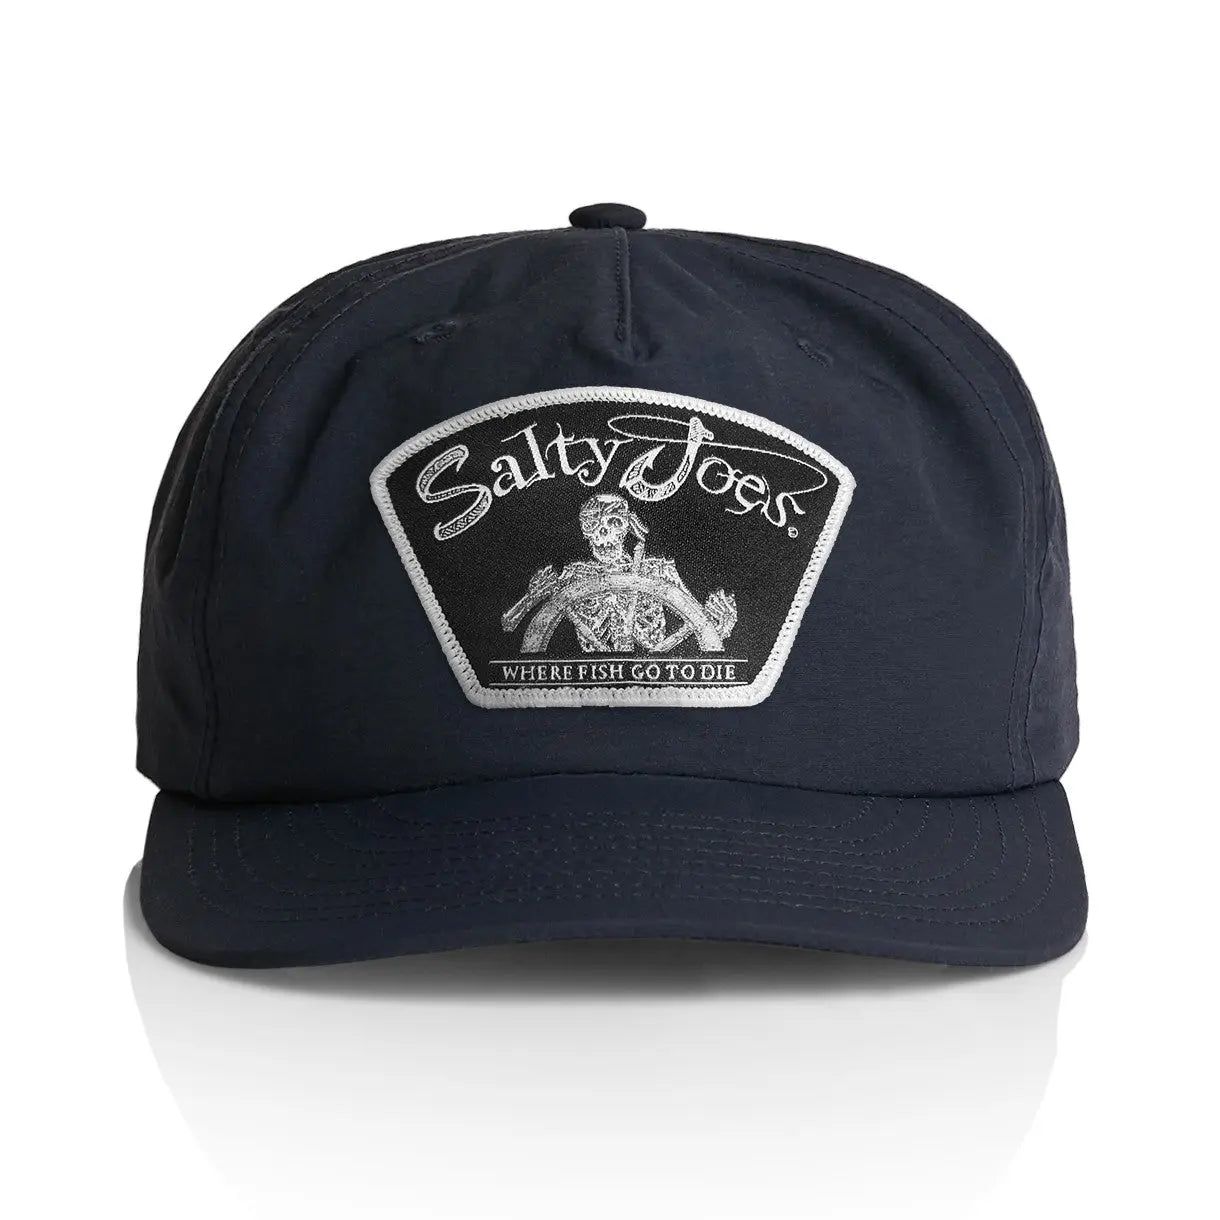 Salty Joe's Back from The Depth Patch Fishing Snapback - Salty Joe's Navy